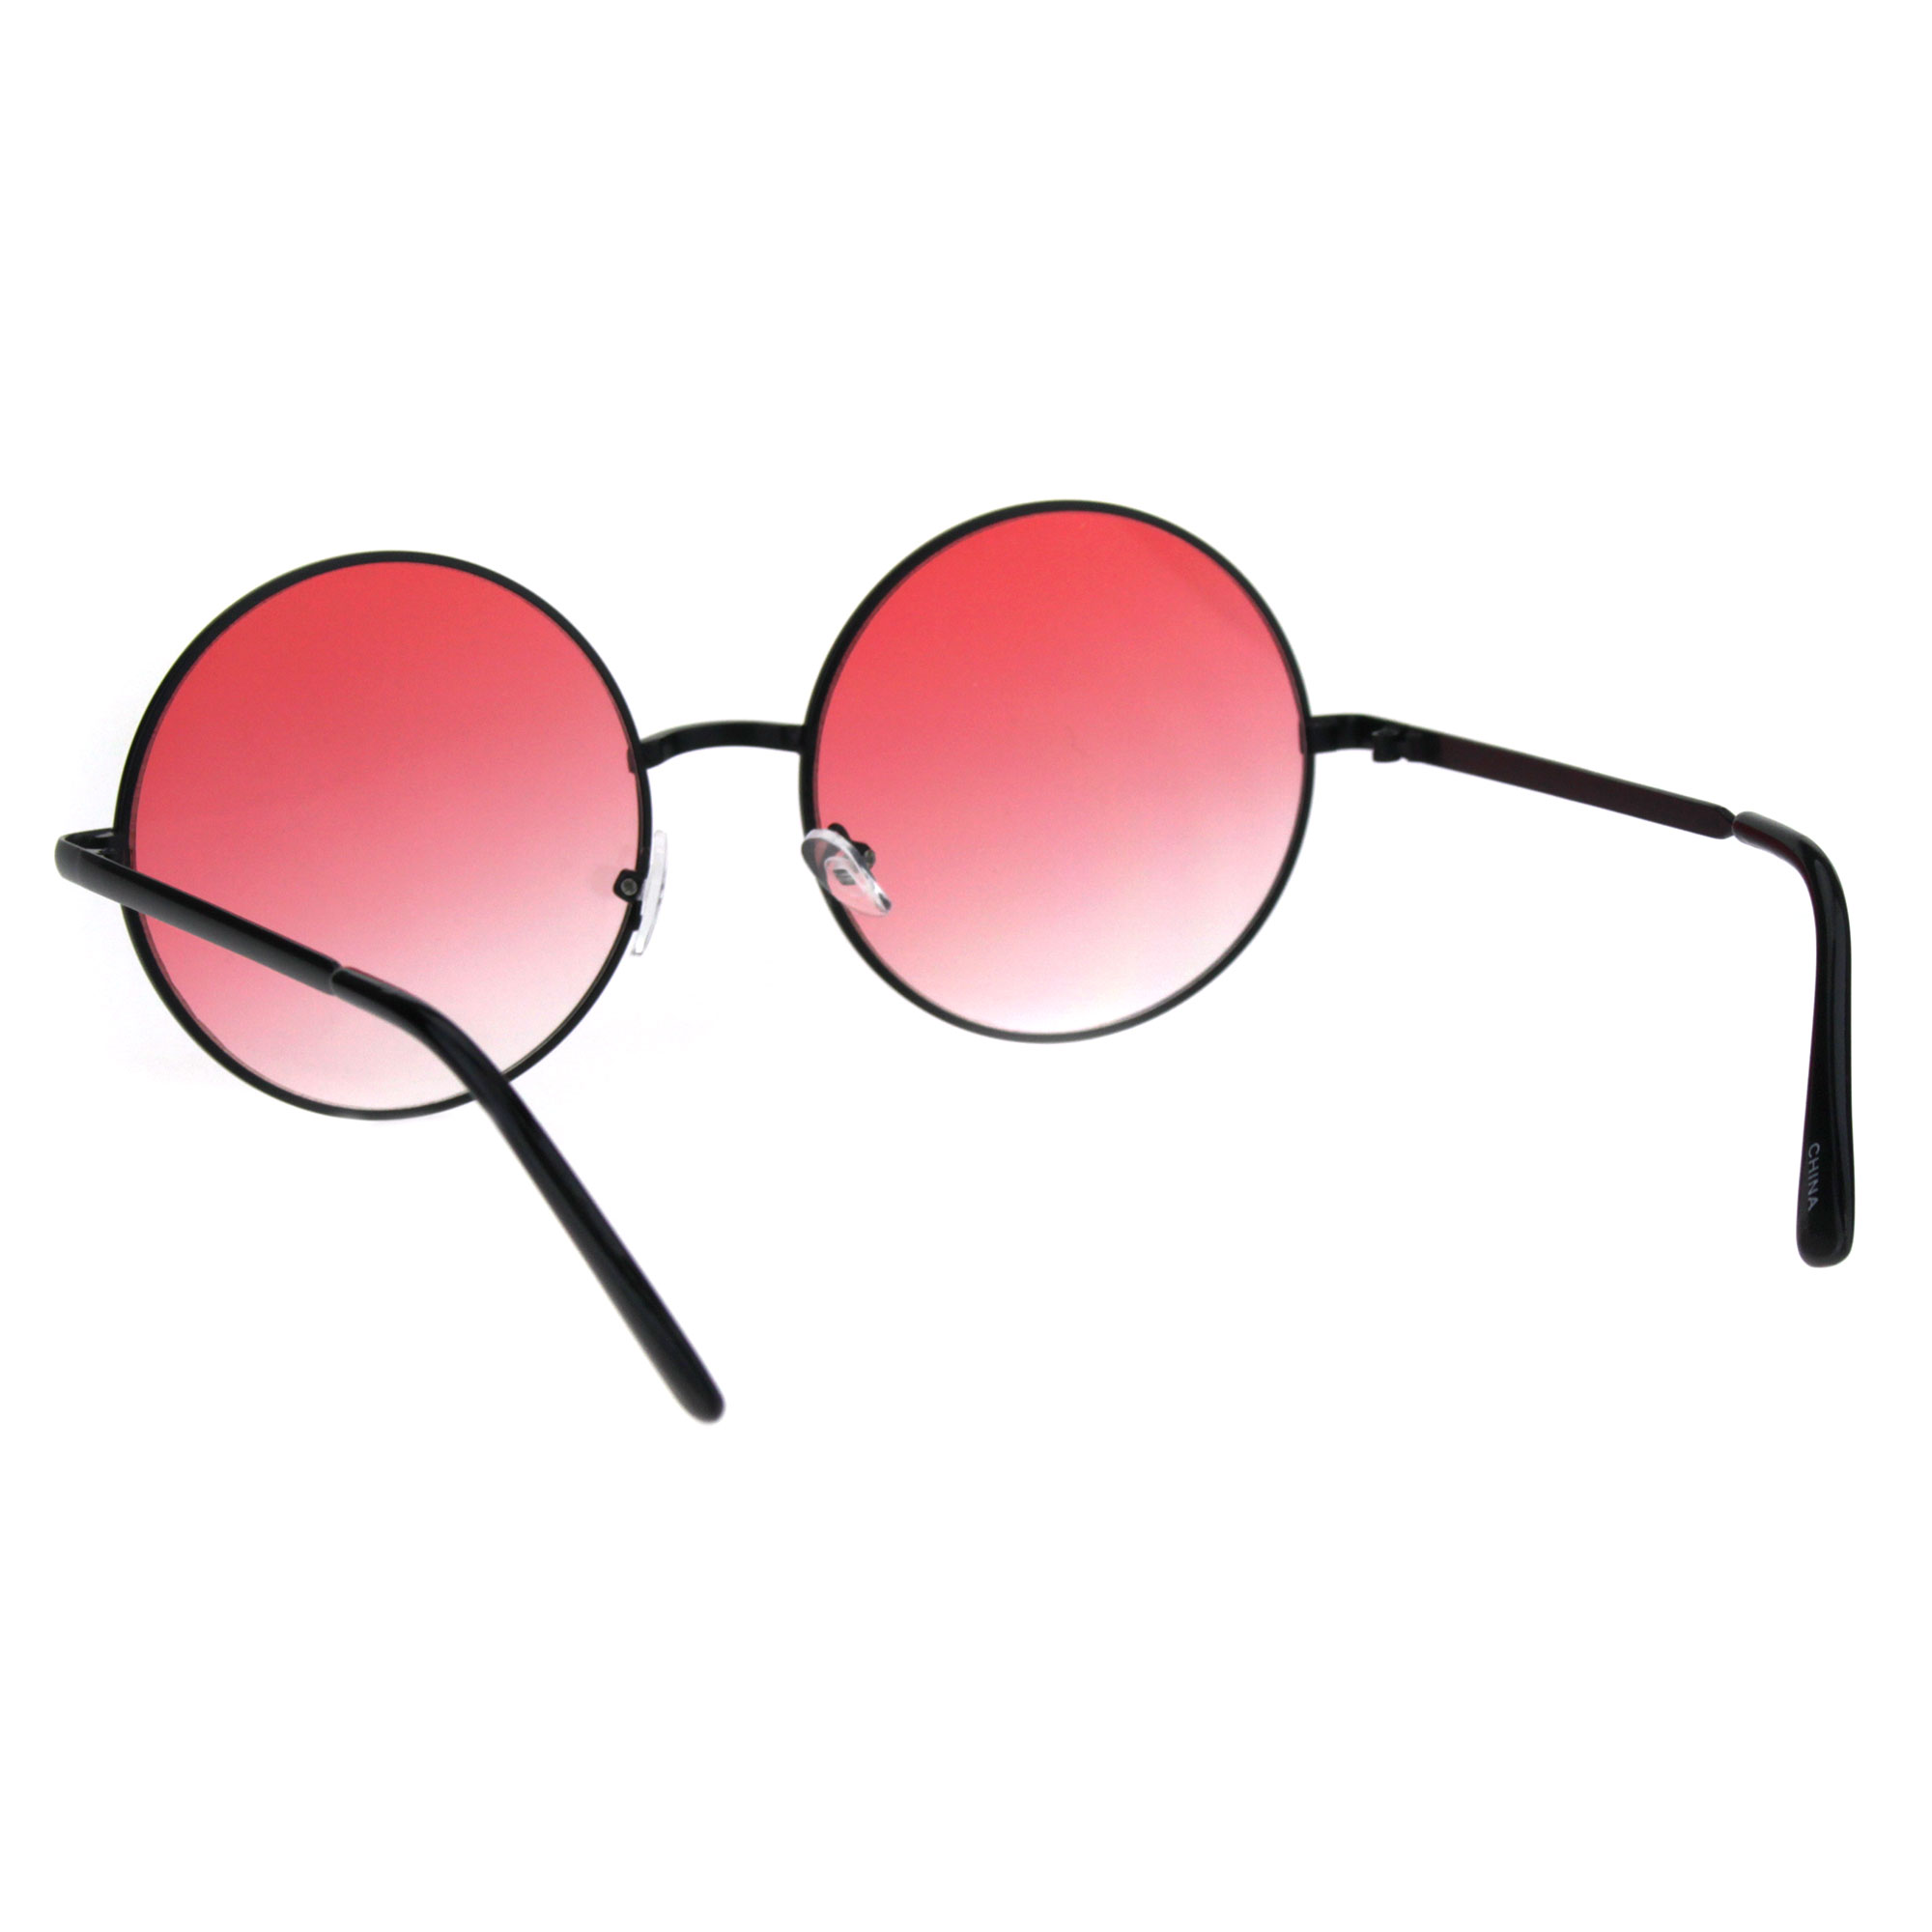 Round Circle Lens Hippie Metal Rim Gradient Sunglasses Black Red - image 4 of 4